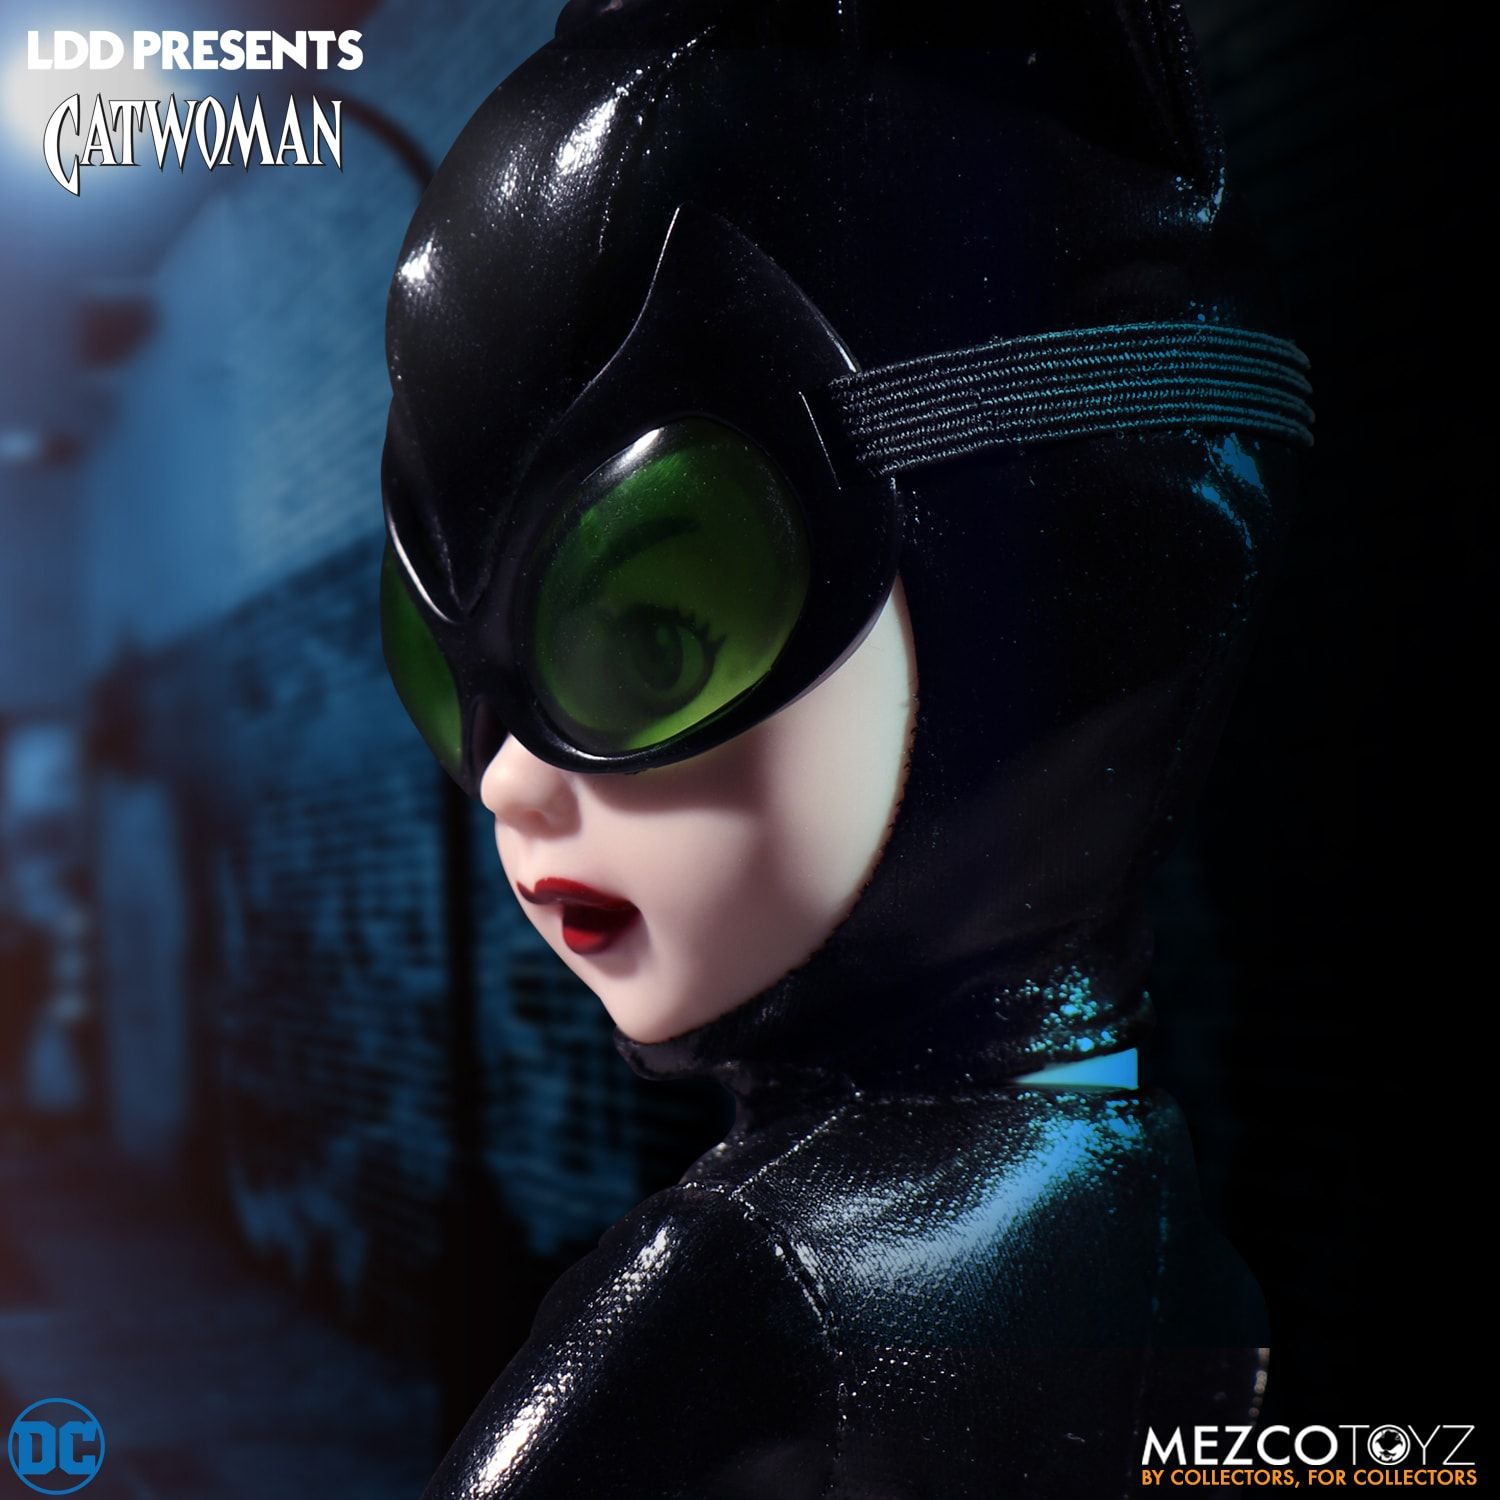 Ldd Presents Dc Universe Catwoman Mezco Toyz